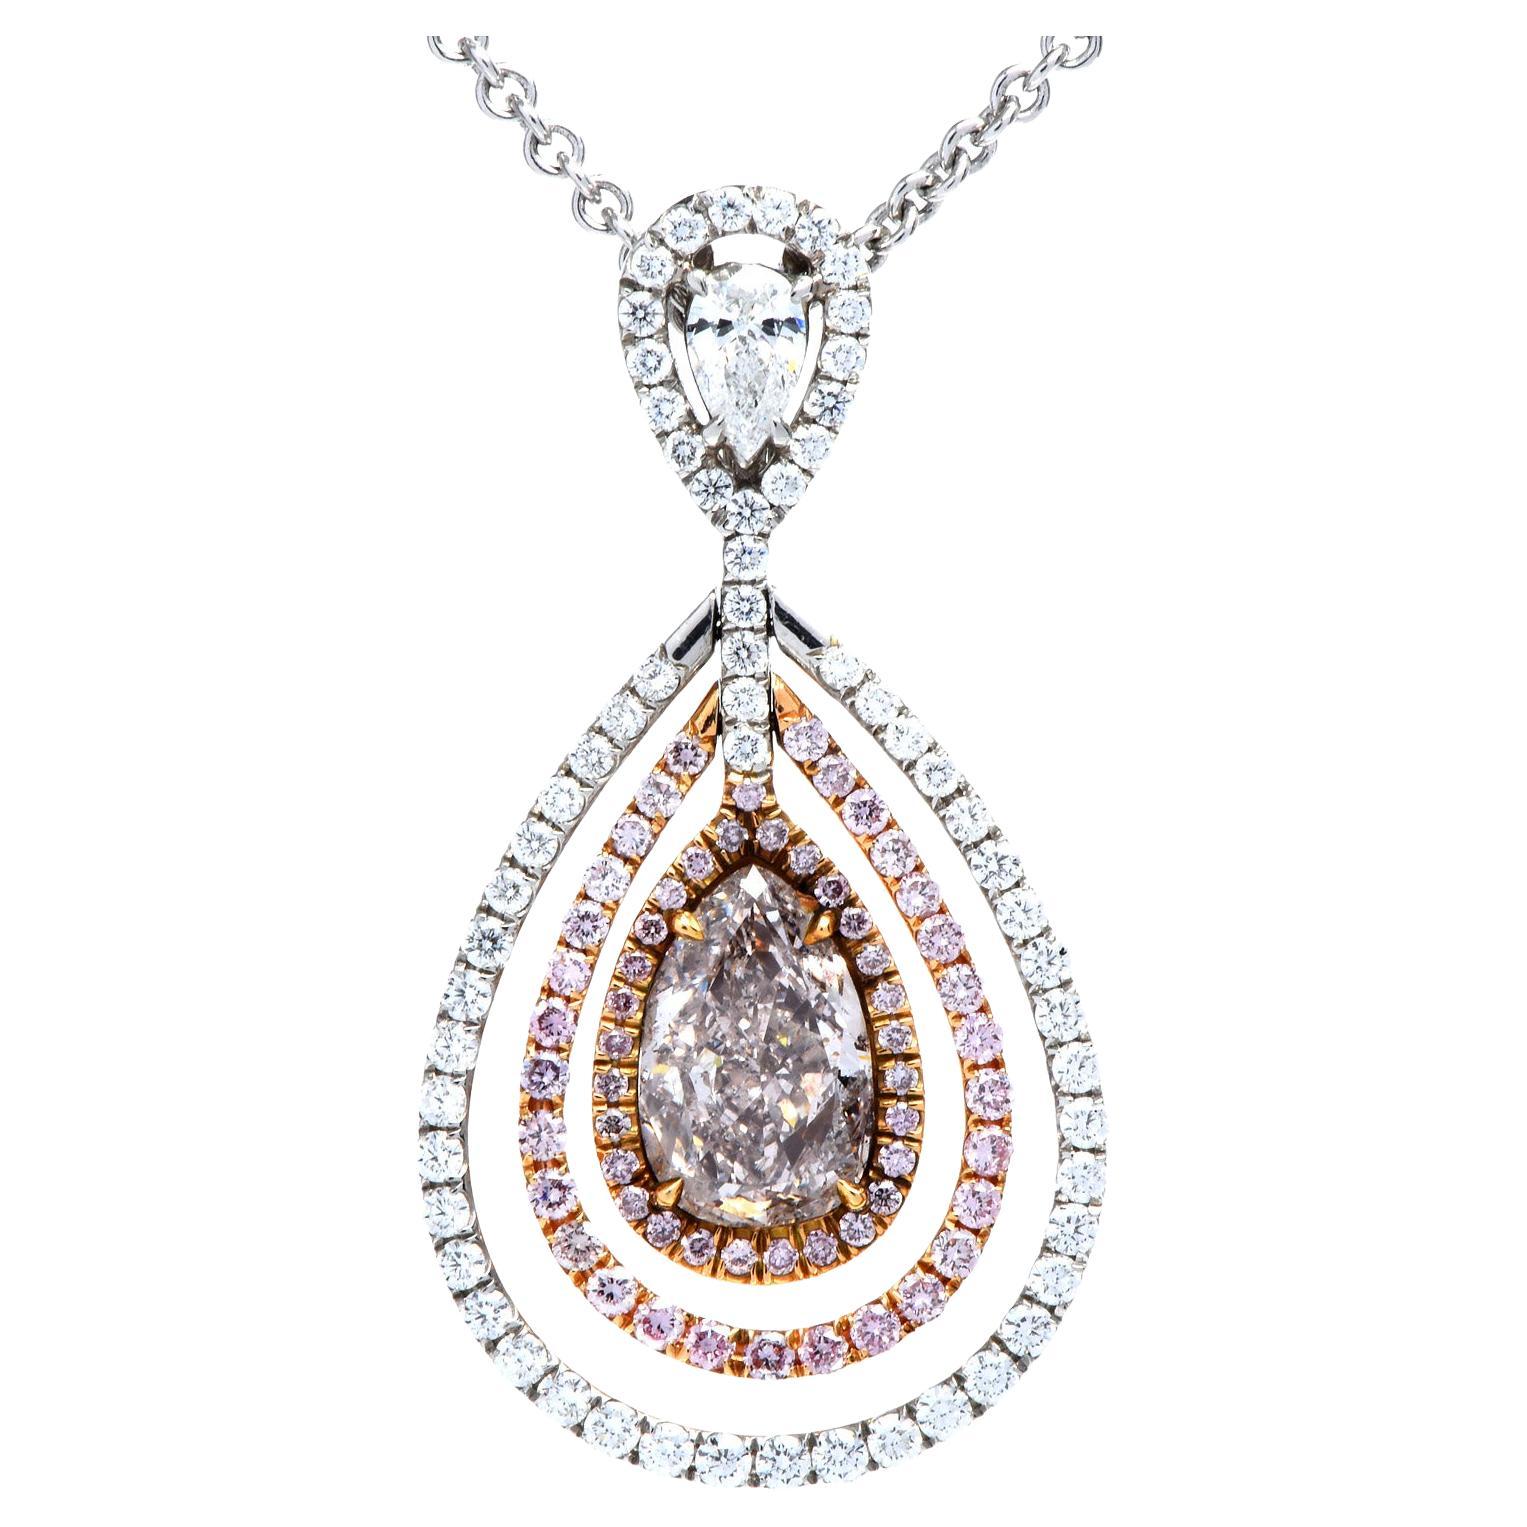 3.76cts GIA Natural Light Pink Platinum18k Diamond Necklace Pendant